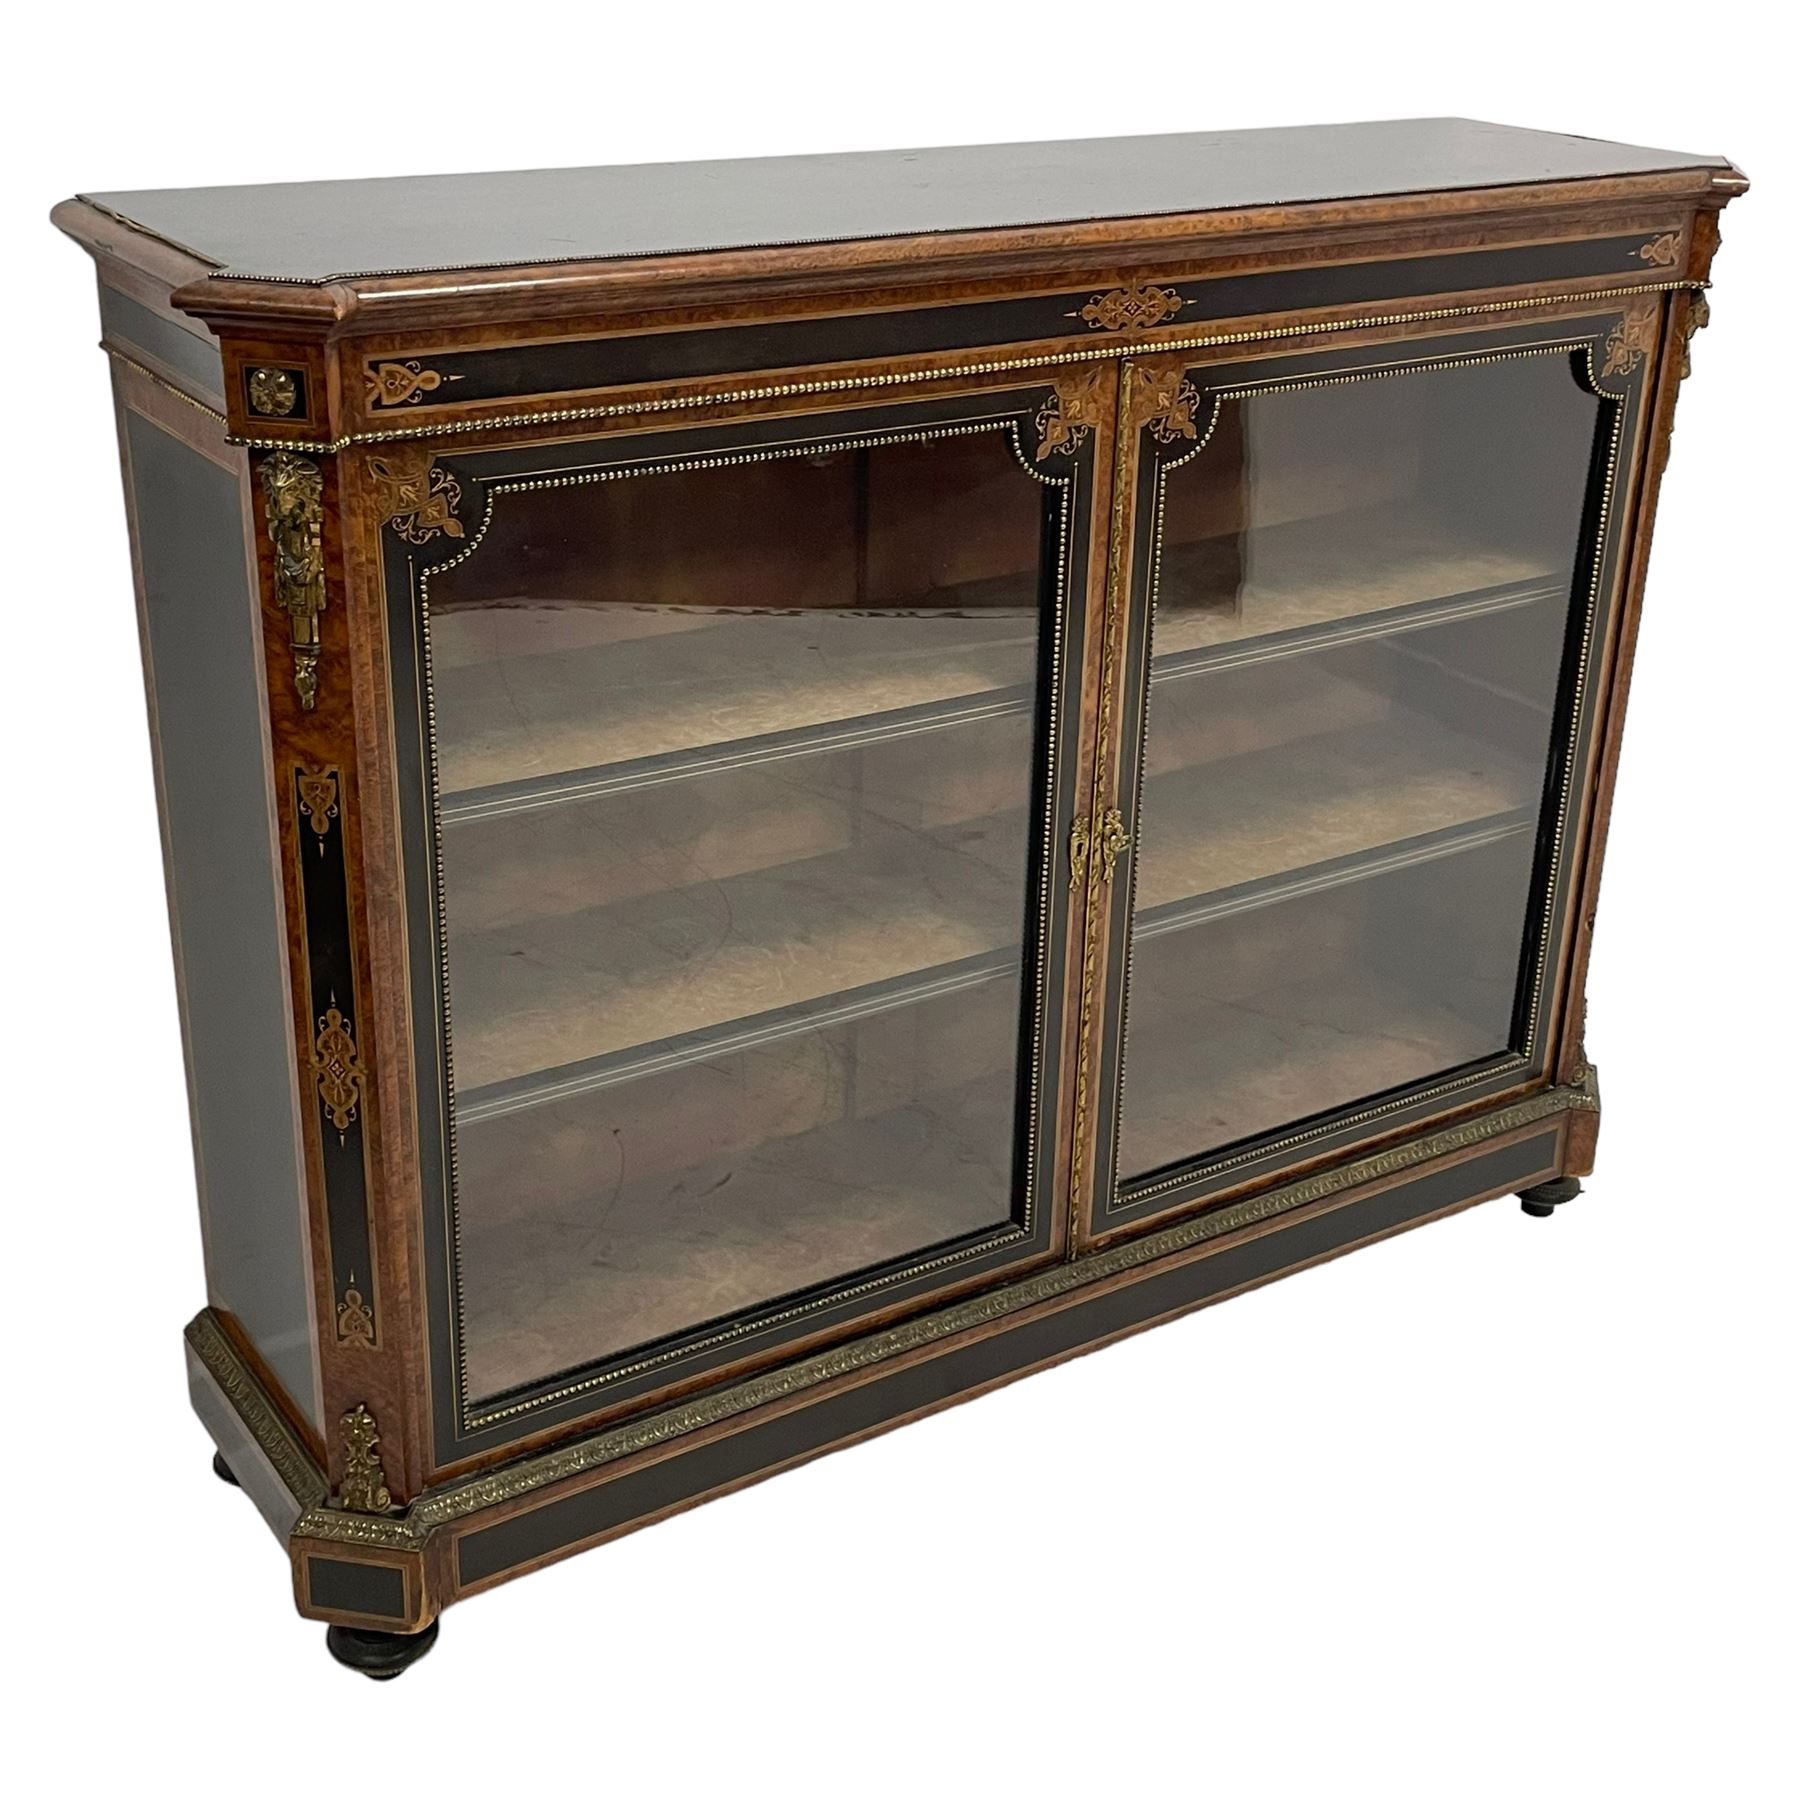 Victorian ebonised and amboyna wood credenza pier cabinet - Image 25 of 26